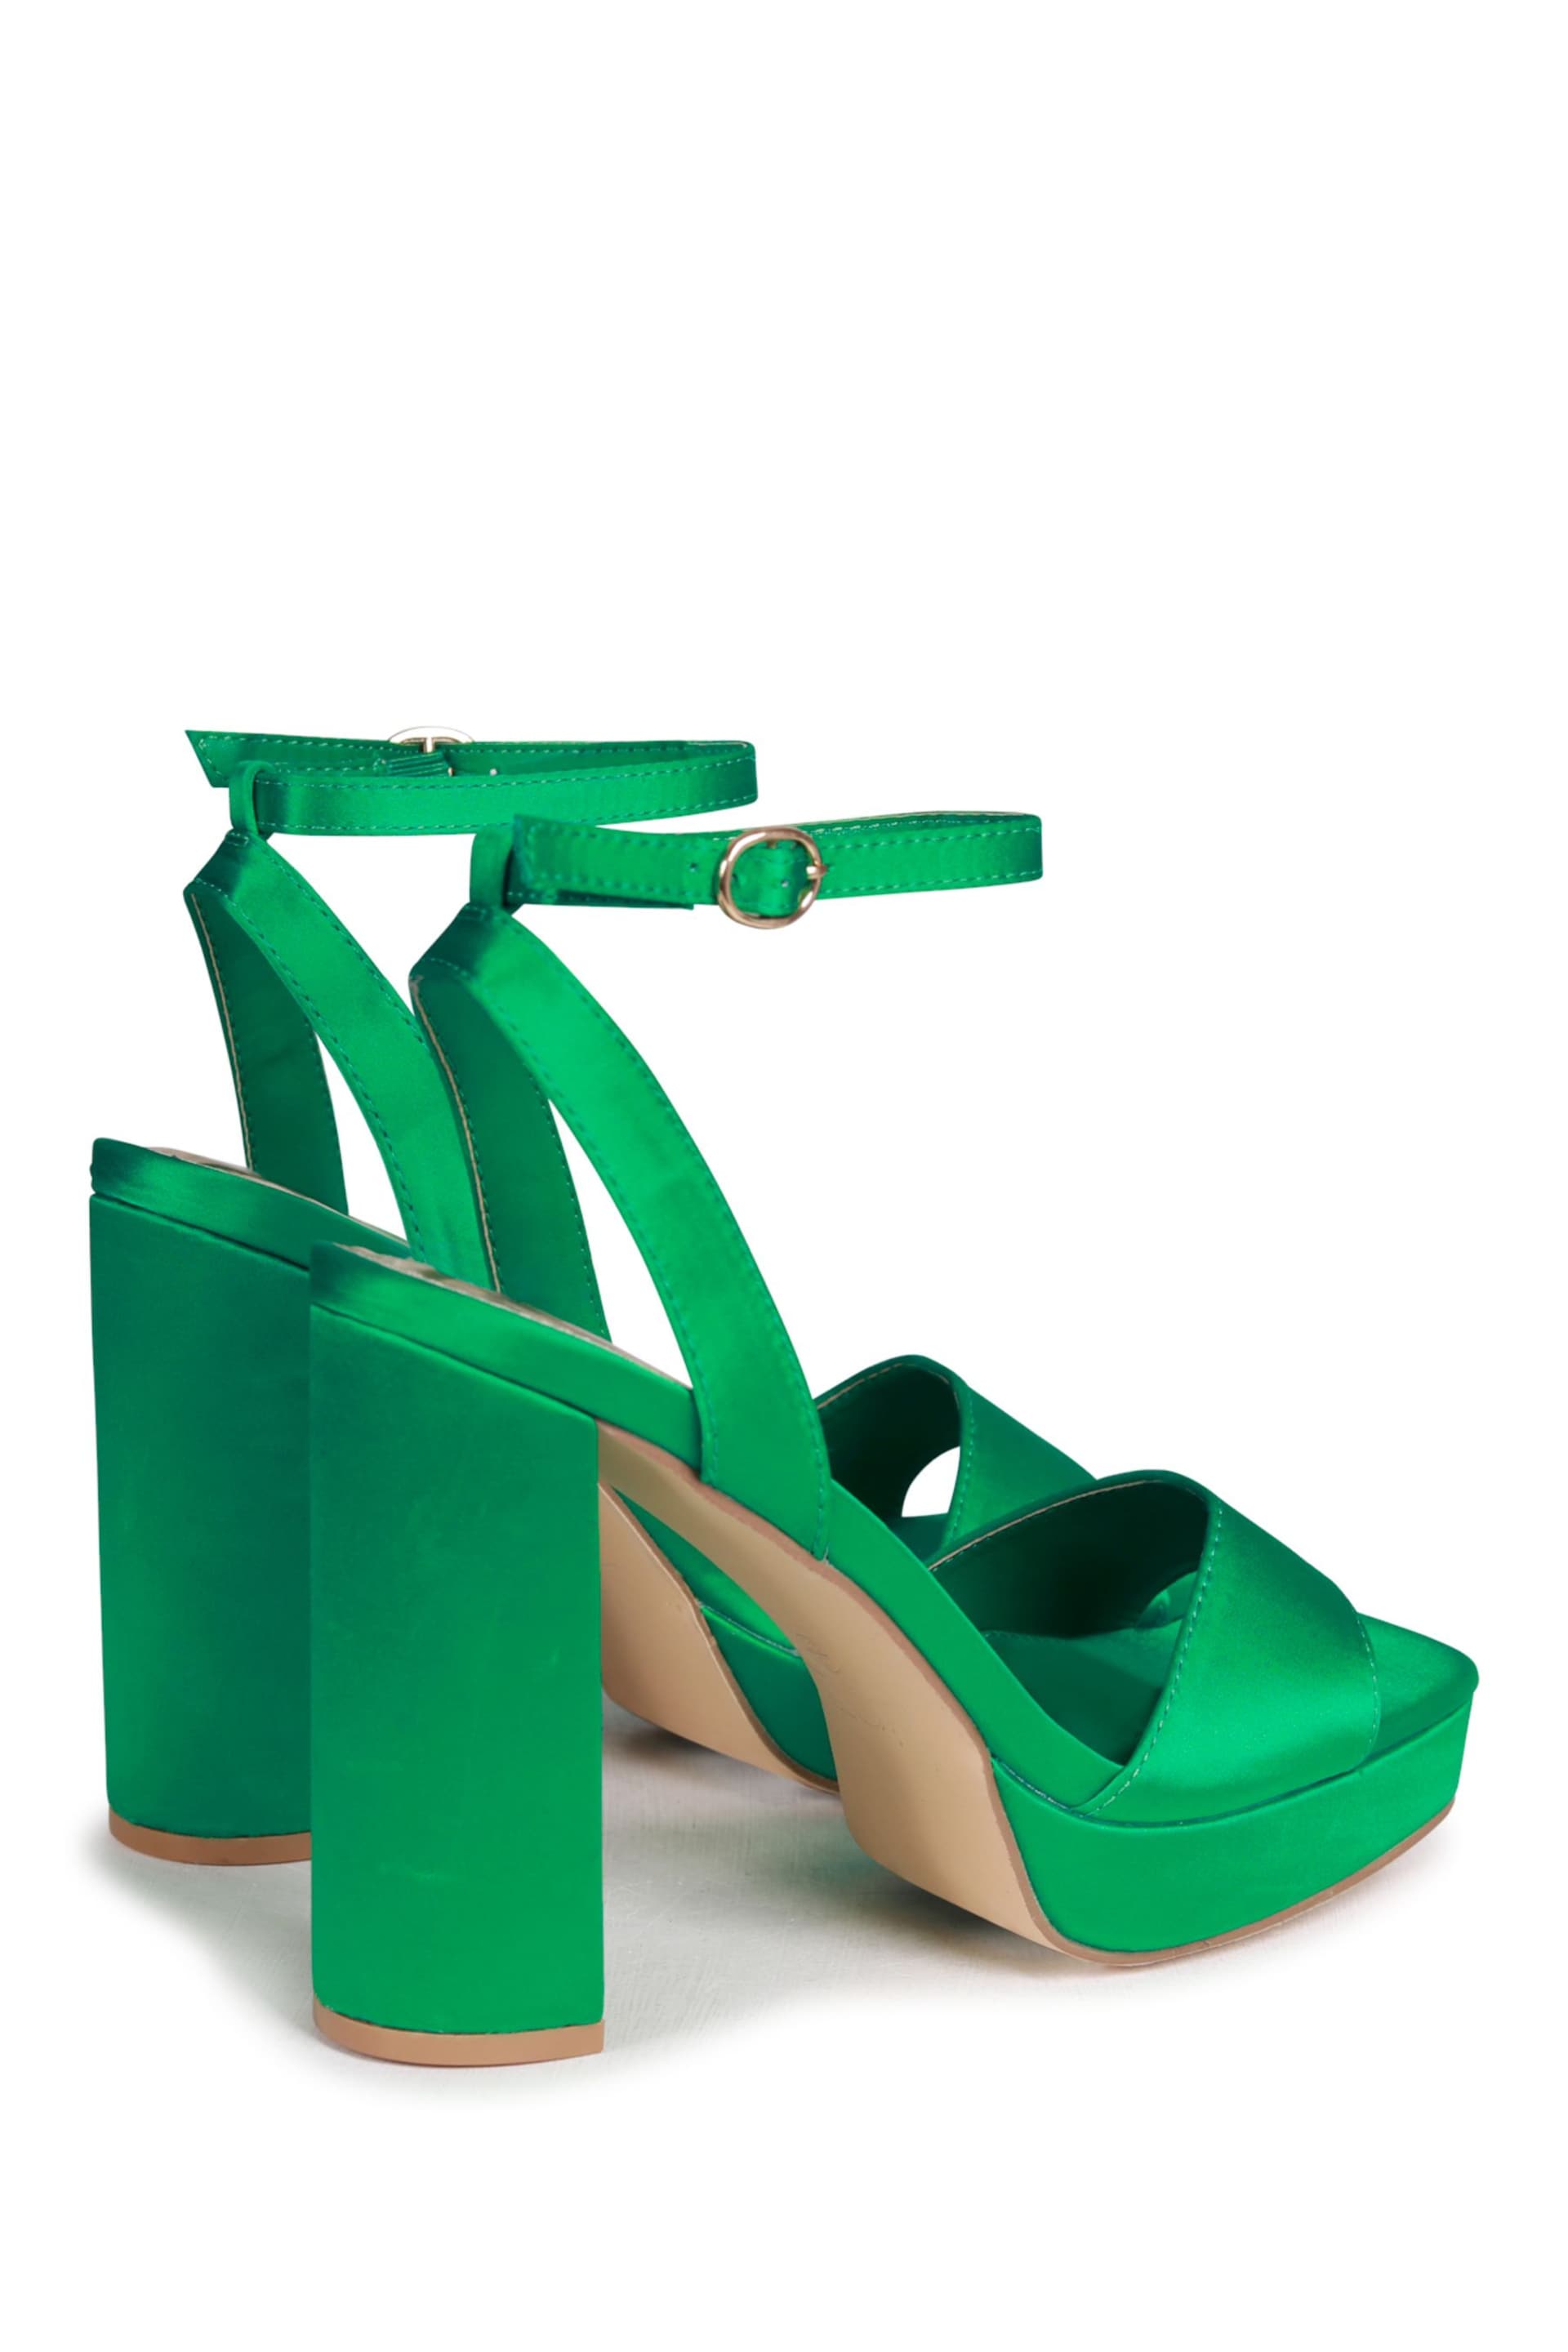 Linzi Green Gloria Platform Heeled Sandals With Wrap Around Ankle Strap - Image 3 of 4